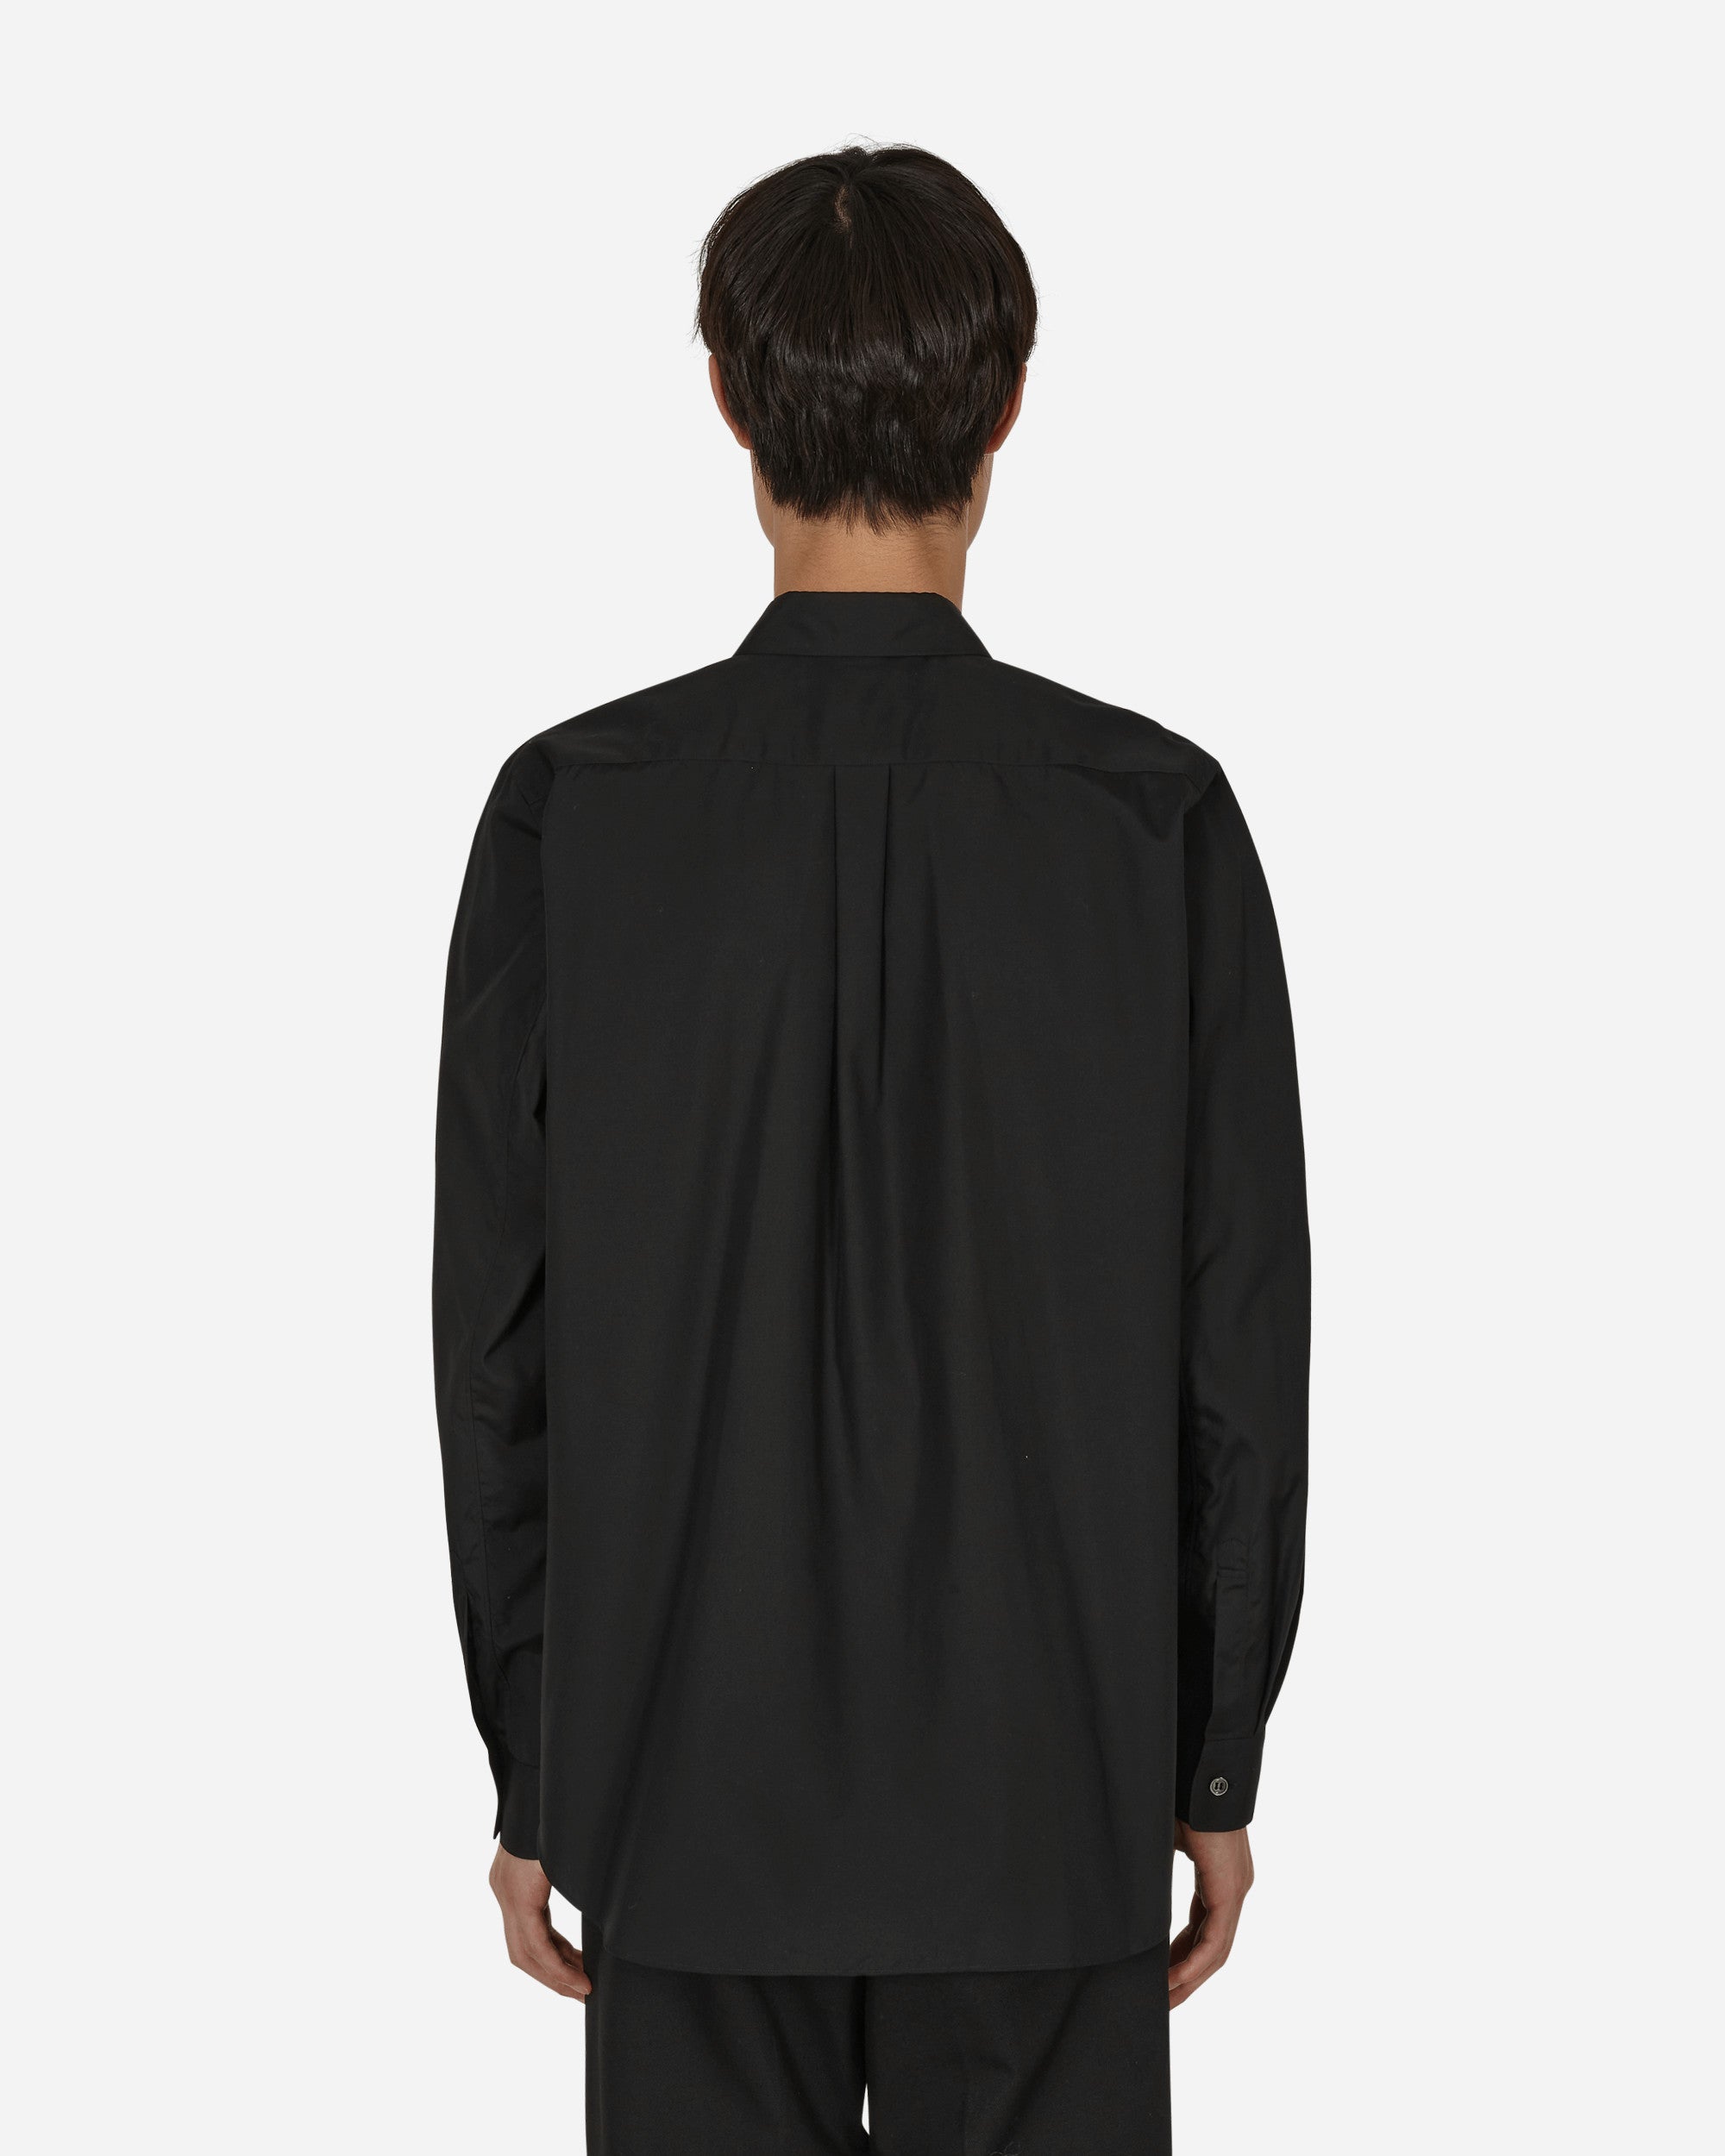 Comme Des Garçons Black Blouse Black Black Shirts Longsleeve 1I-B002-S22 1